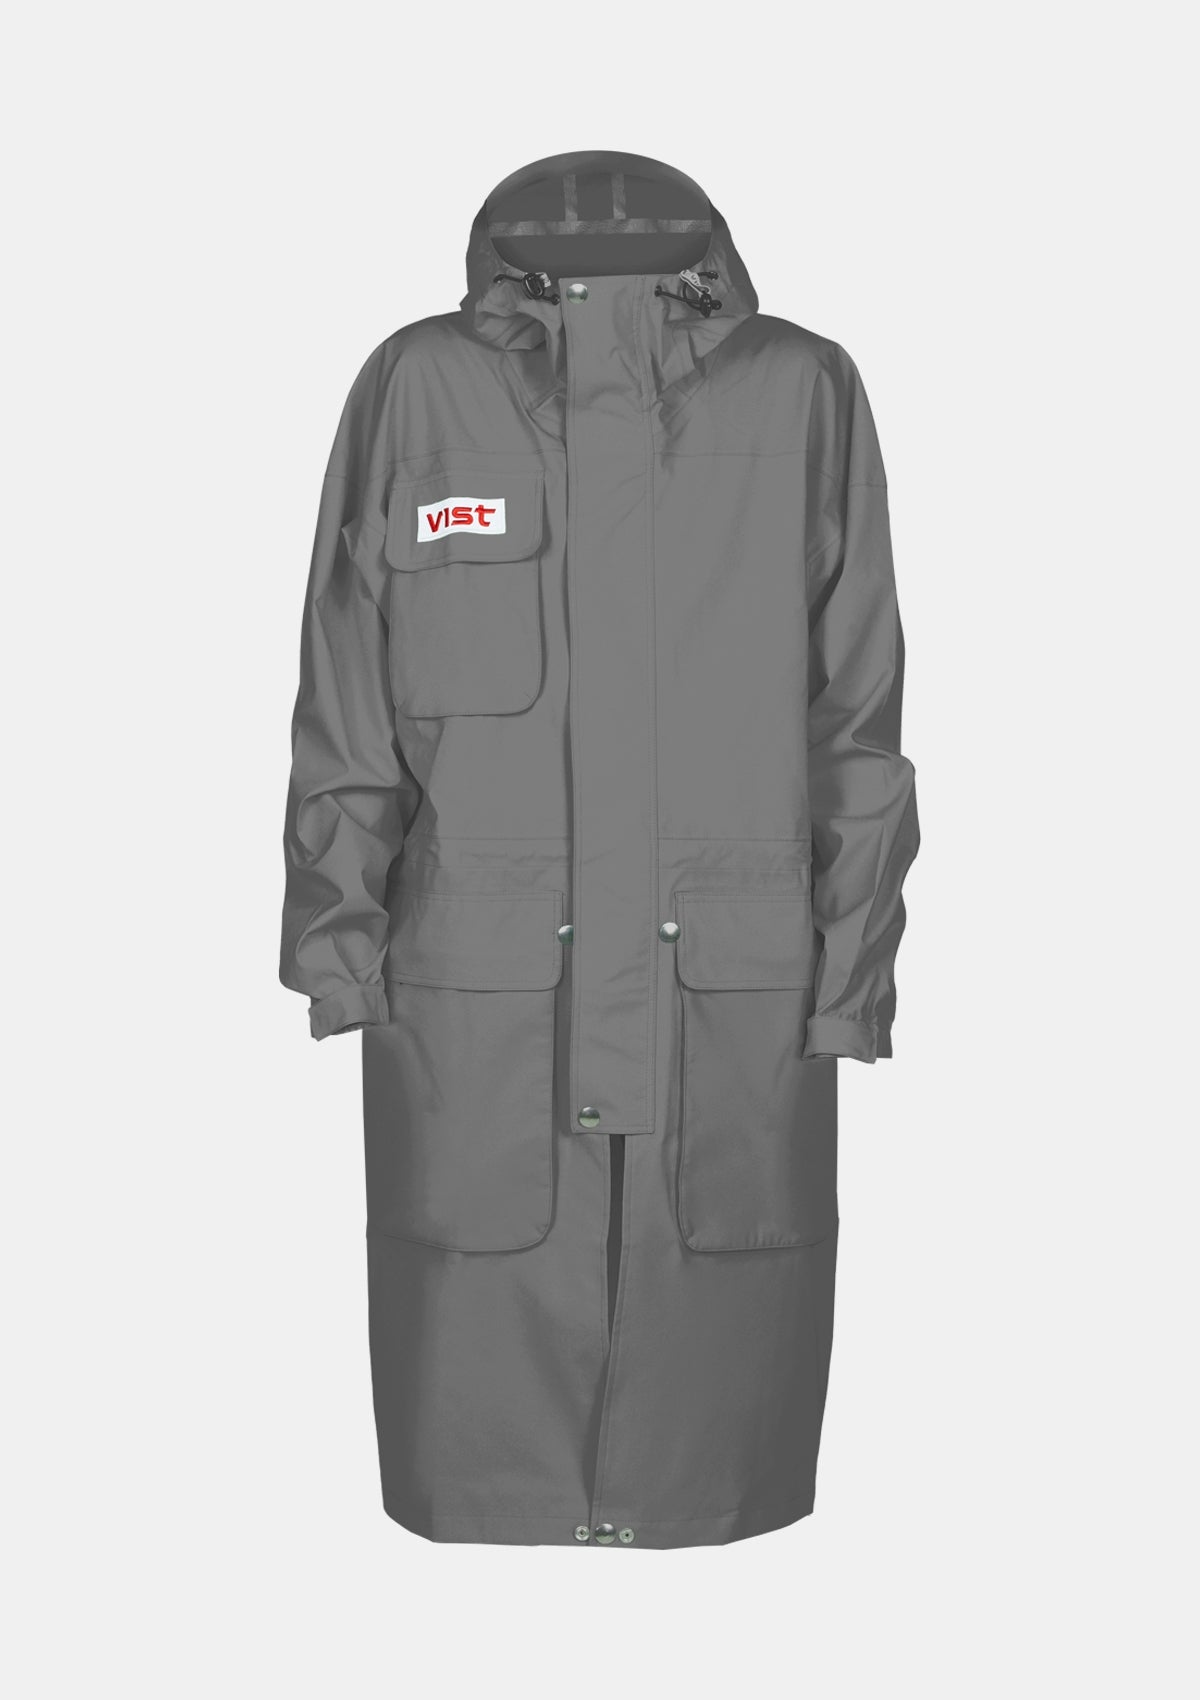  Adjustable Raincoat: VIST Italy Srl: high-quality ski apparel